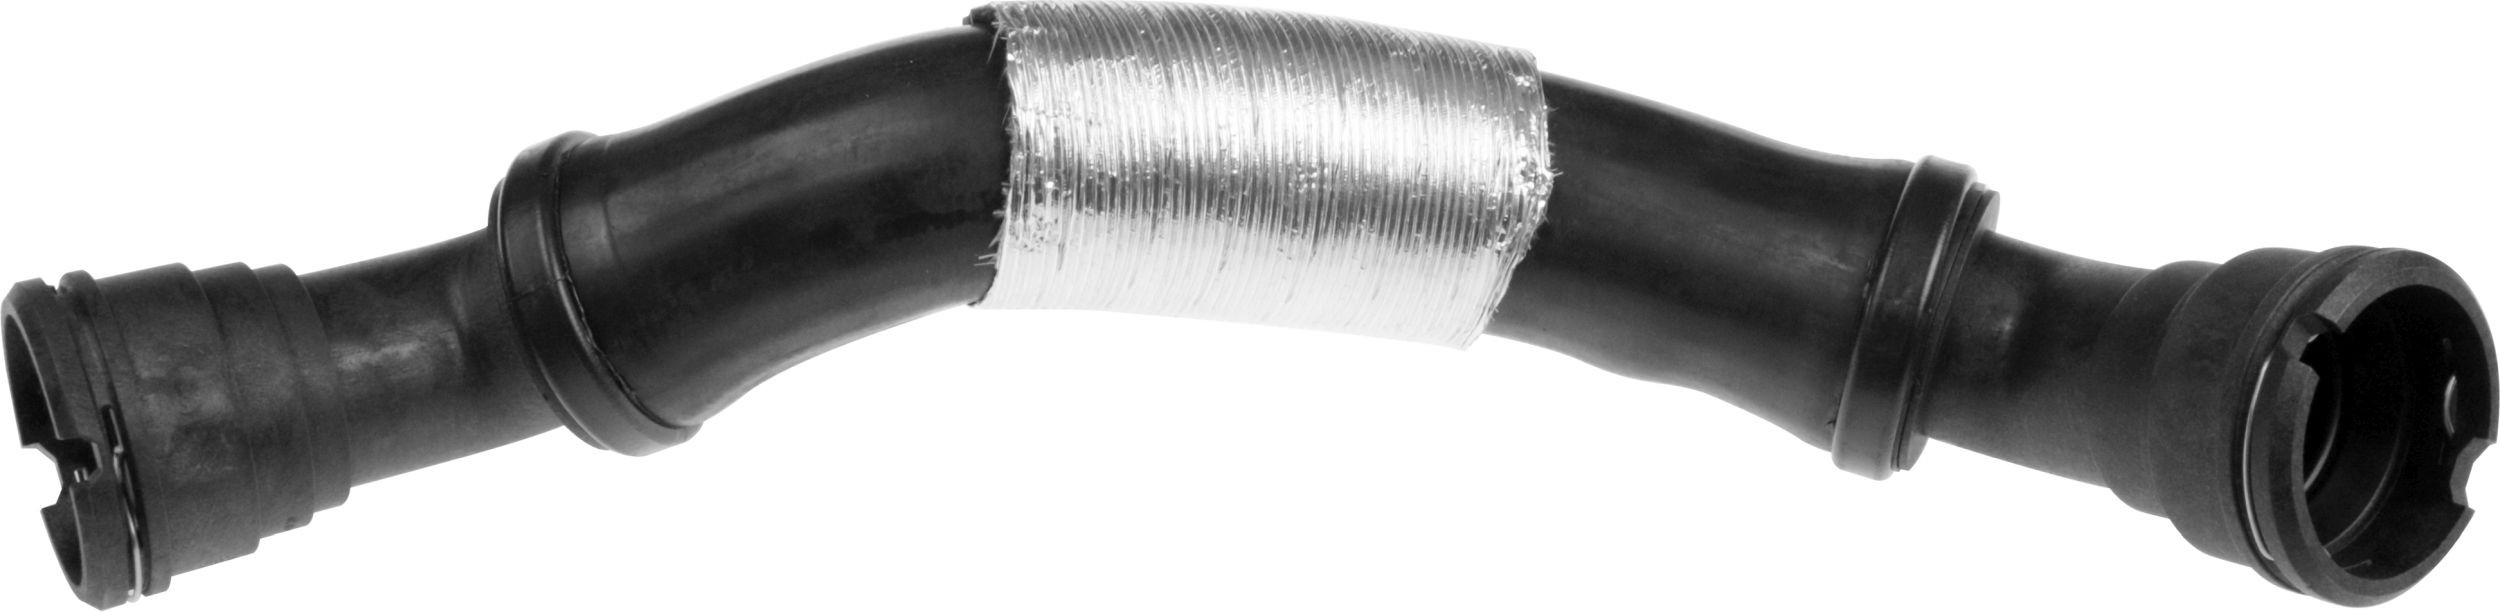 Ford USA Pipes and hoses parts - Radiator Hose GATES 05-4034